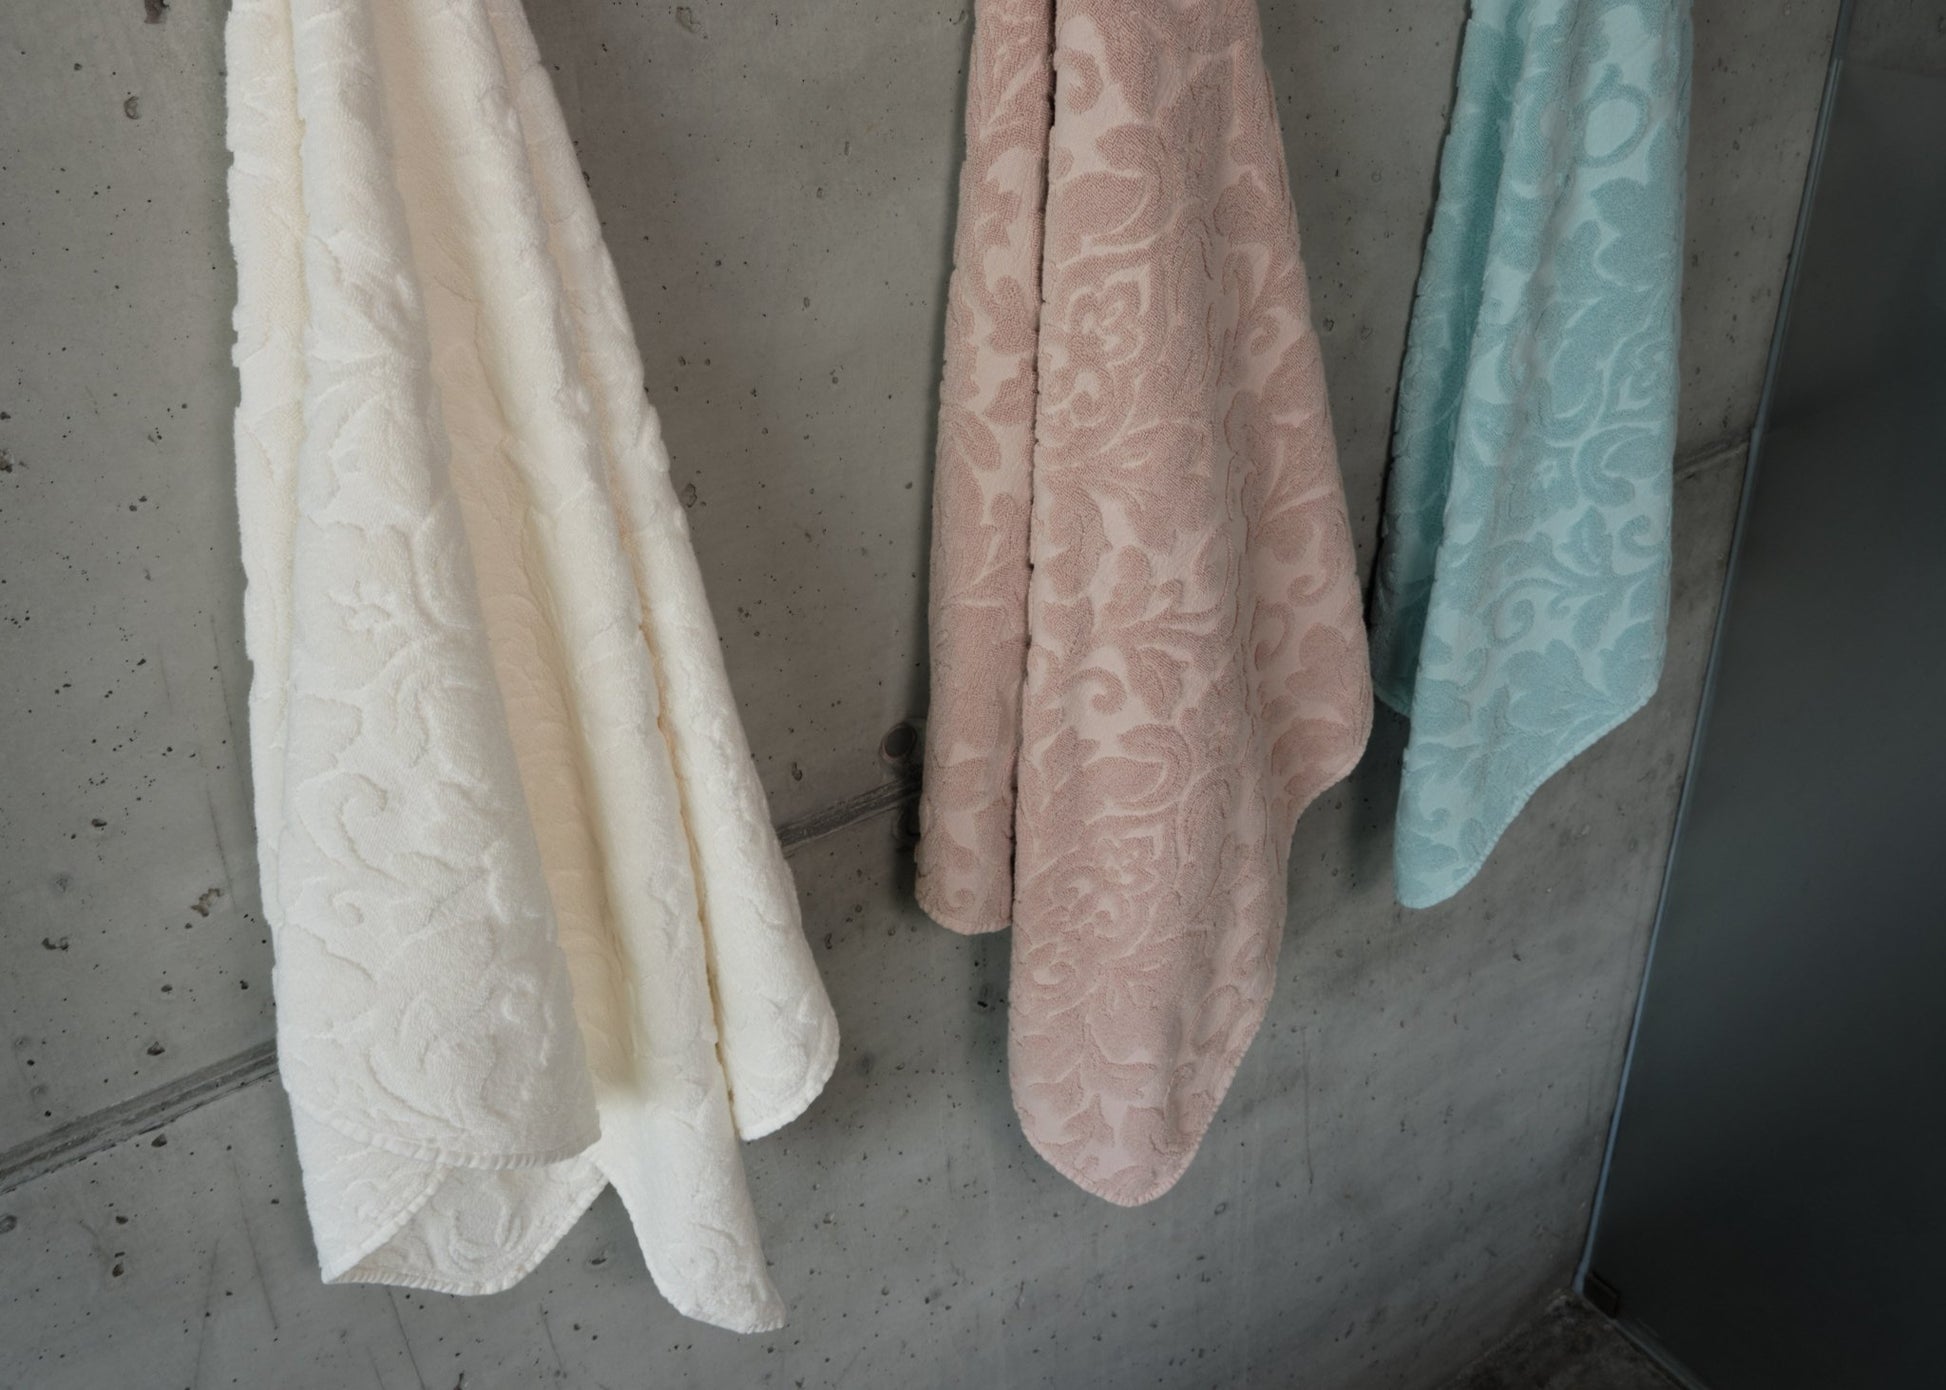 Romantic Egyptian Cotton Bathroom Towels - 235 Ice - |VESIMI Design| Luxury and Rustic bathrooms online